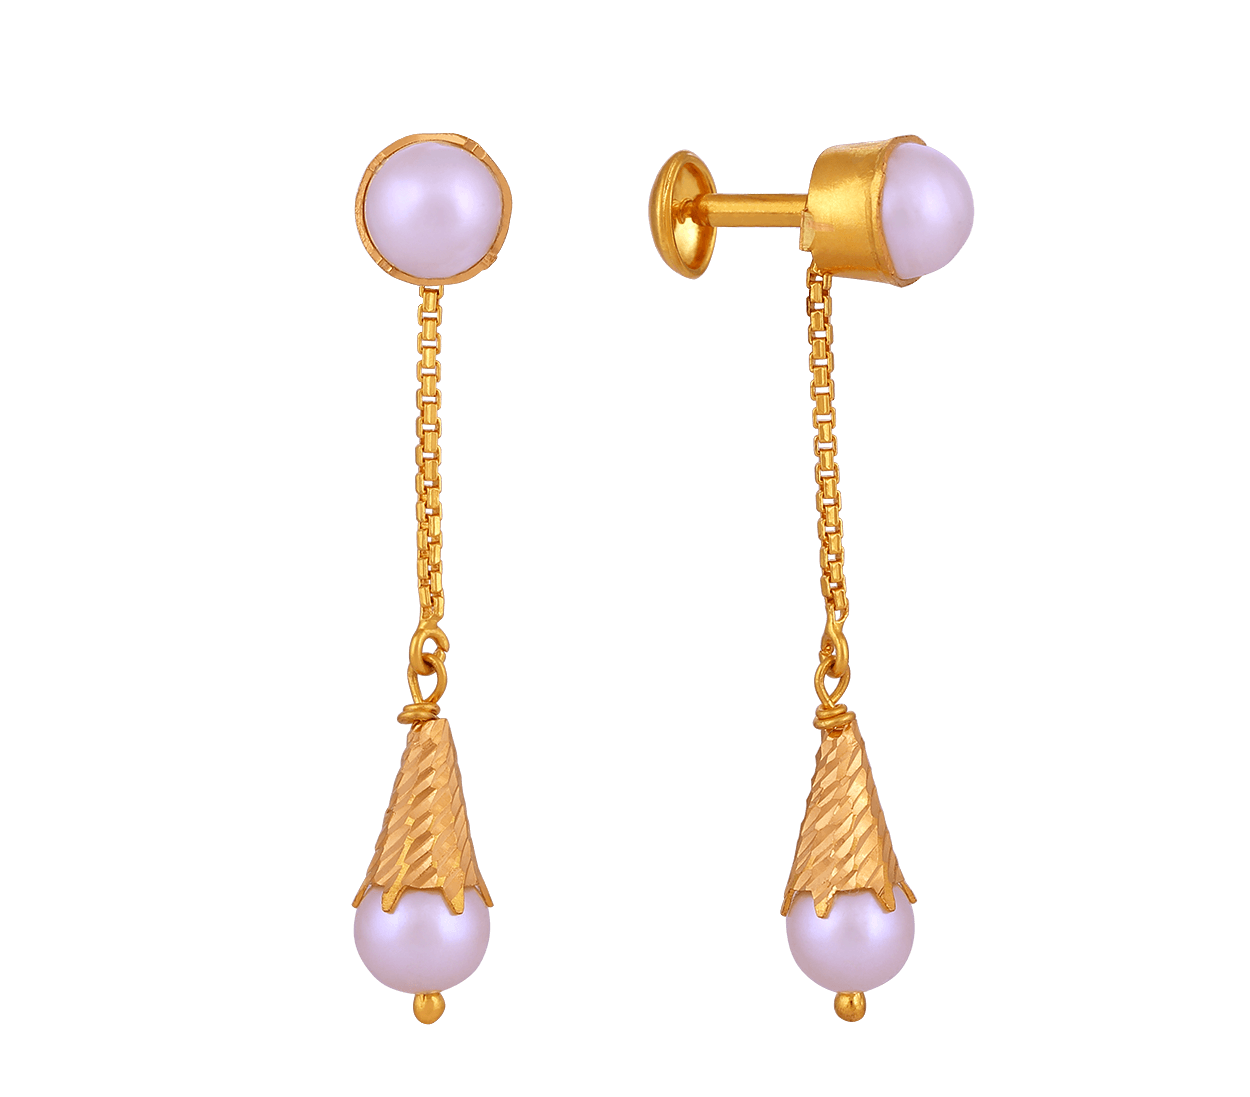 Joyalukkas 22KT Yellow Gold Stud Earrings for Girls  Amazonin Fashion